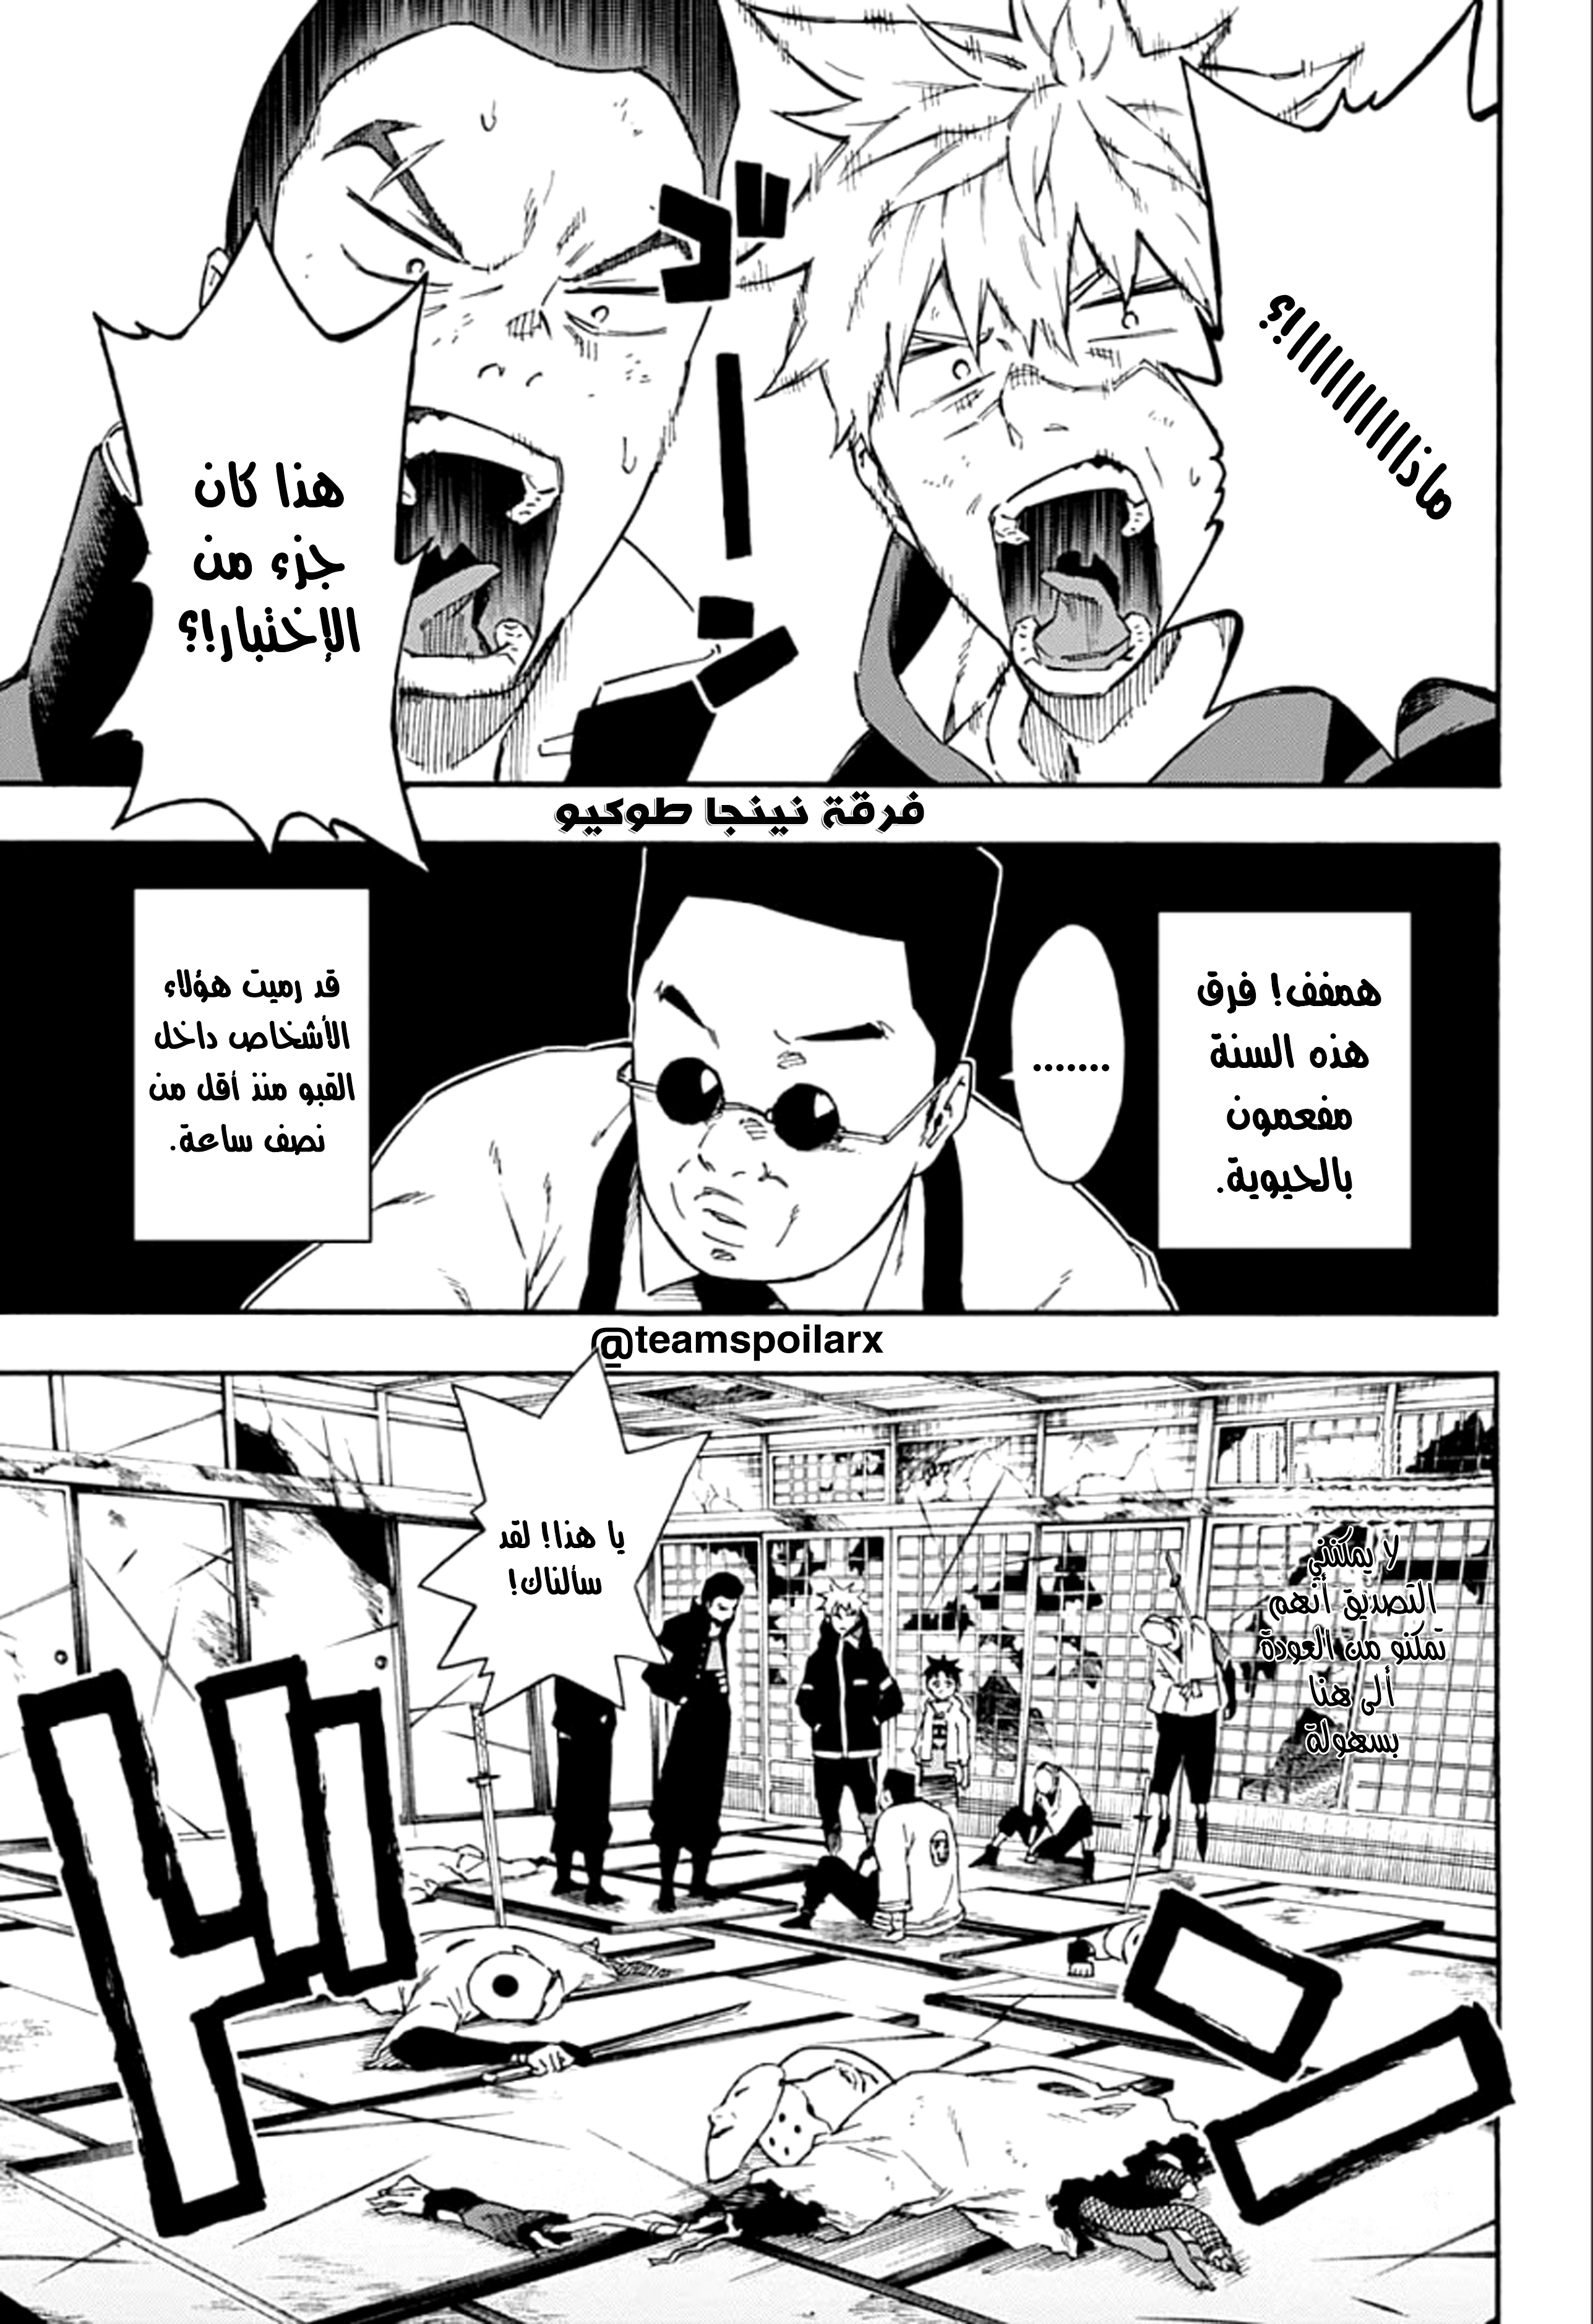 Tokyo Shinobi Squad: Chapter 15 - Page 1